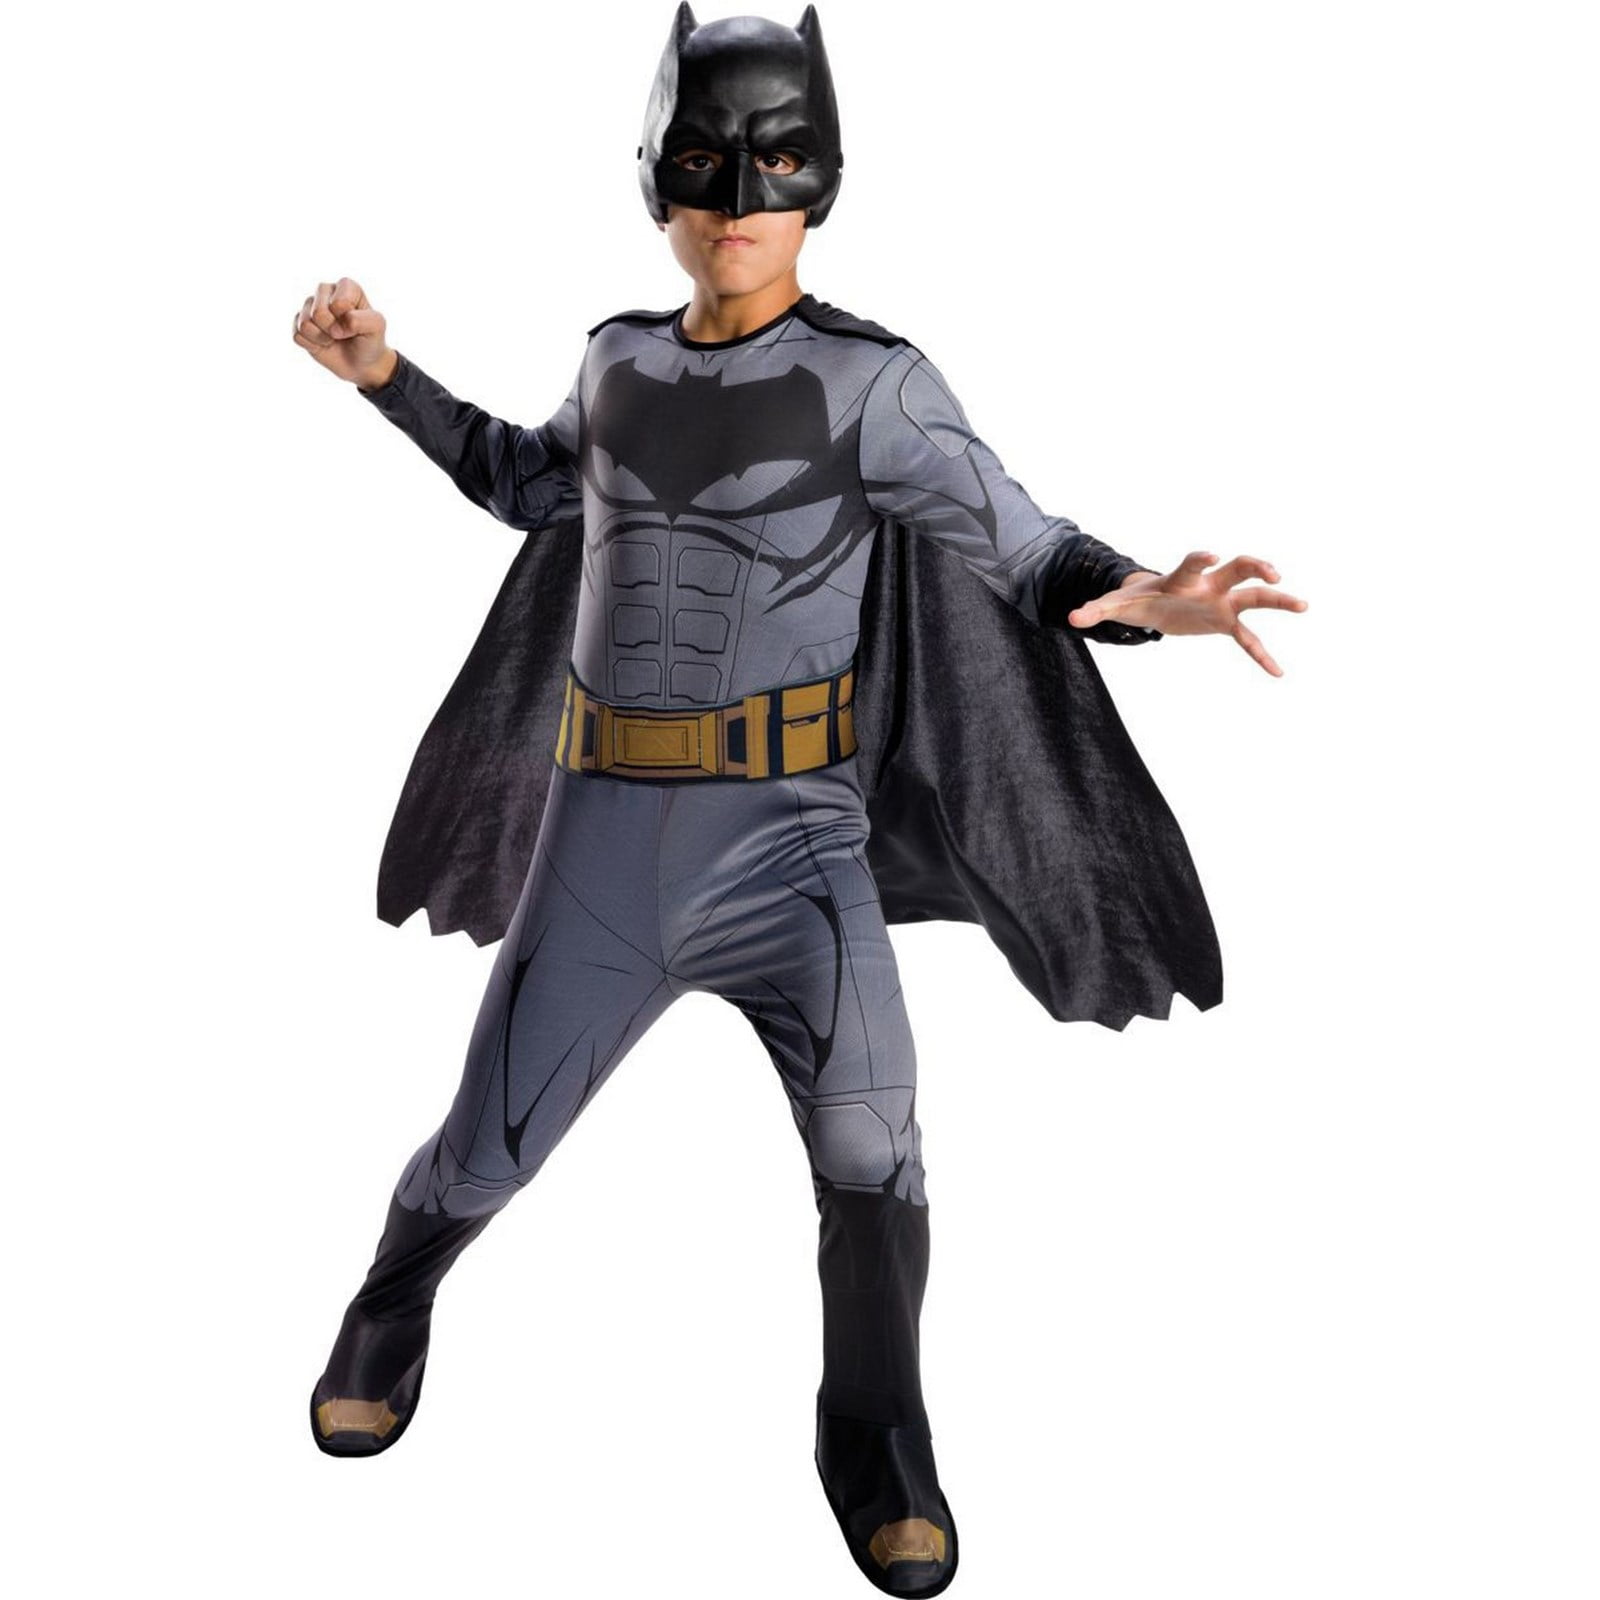 12-14 882006 Large Muscle Chest Batman Deluxe Boys Costume 